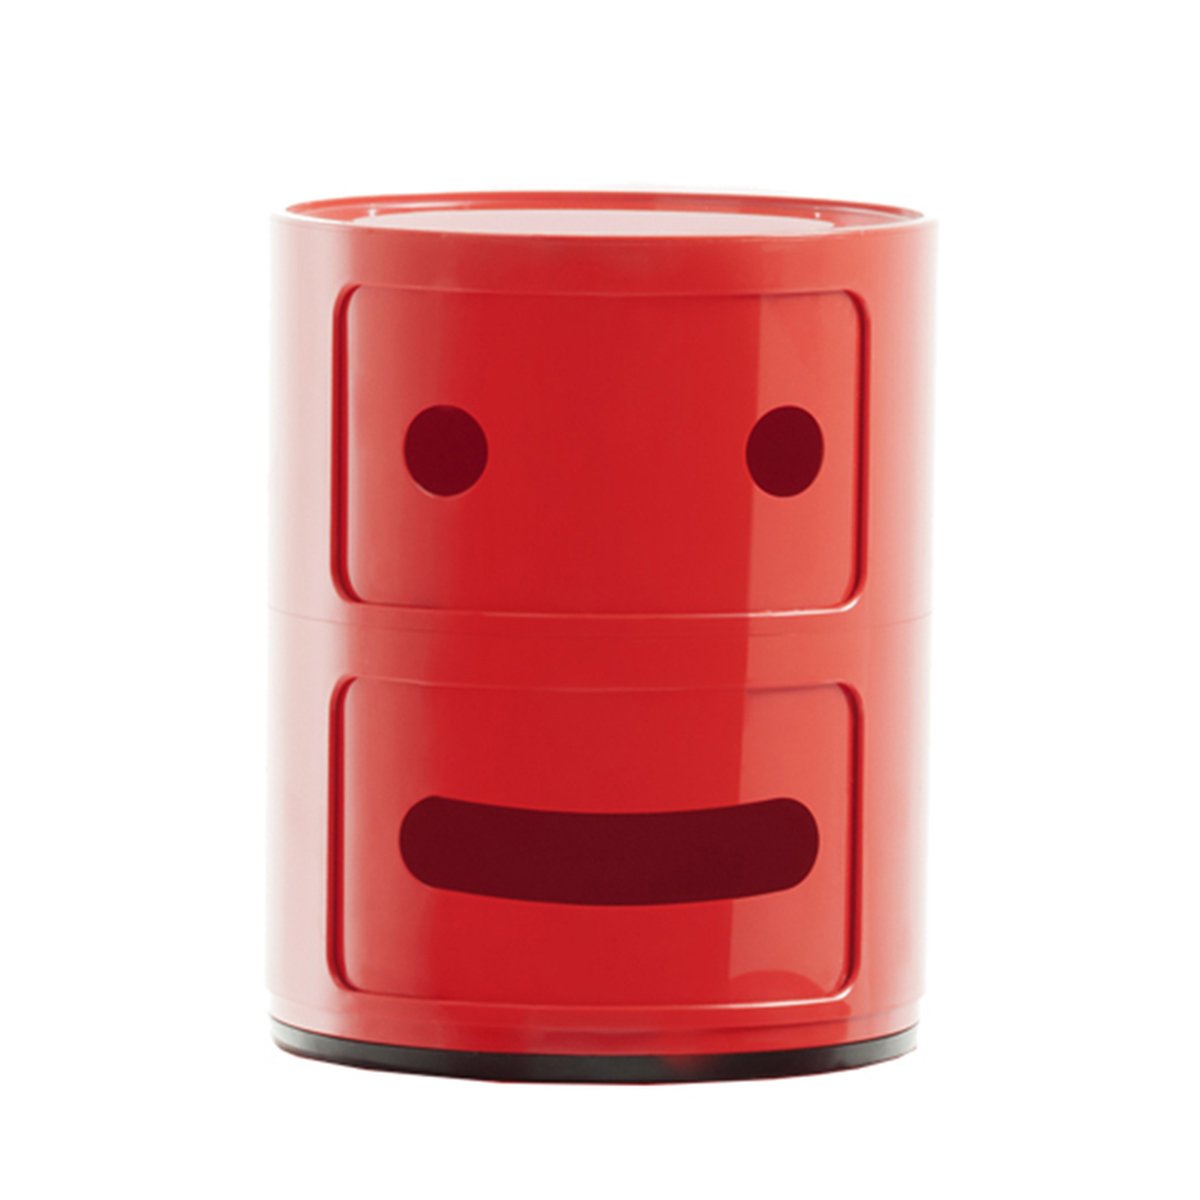 Kartell Componibili Smile storage unit 2, 2 modules, red | Design